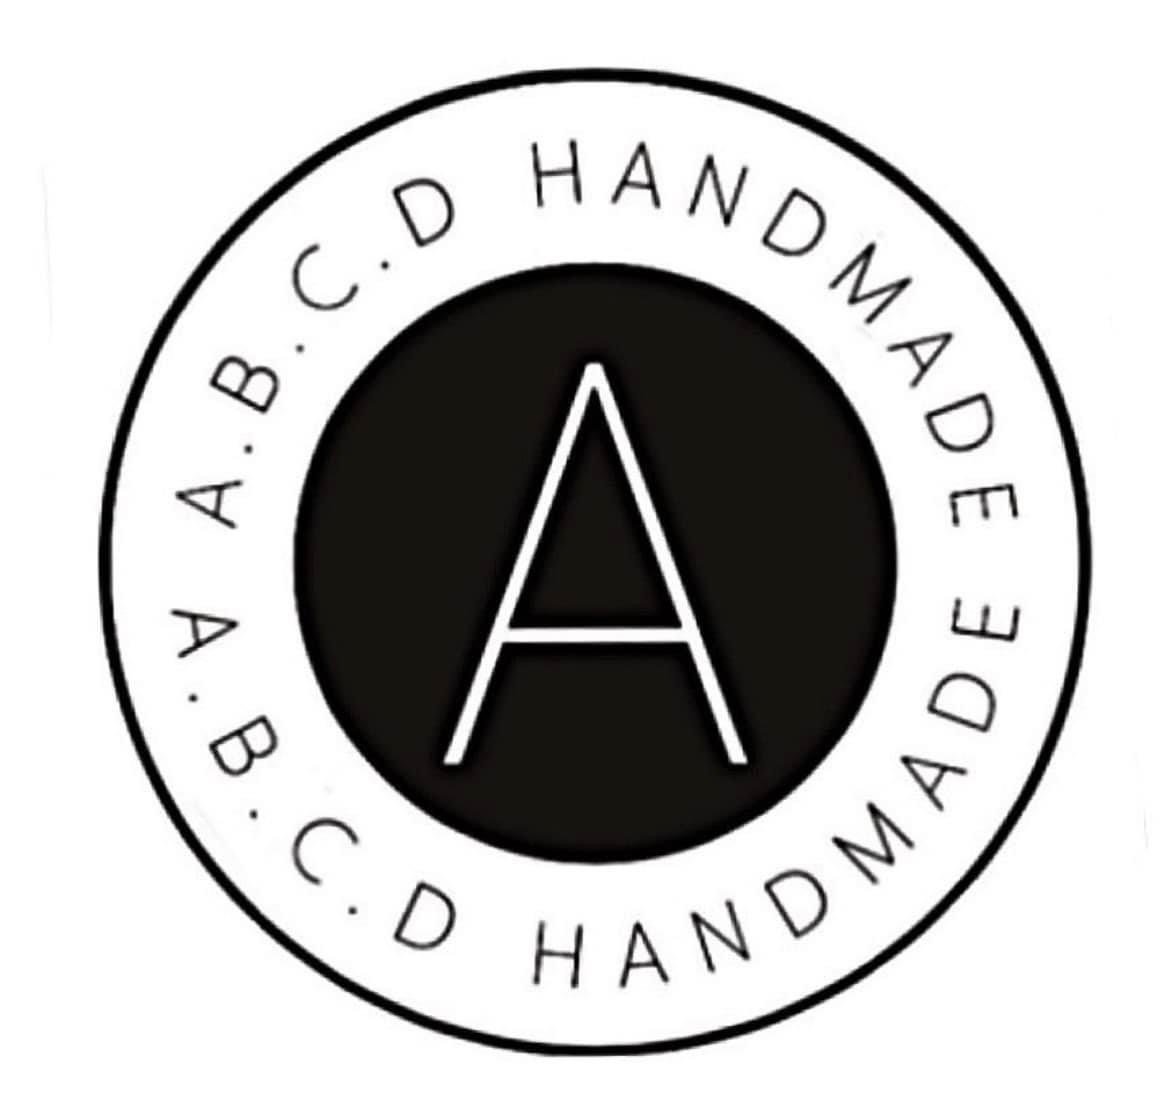 A.b.c.dhandmade